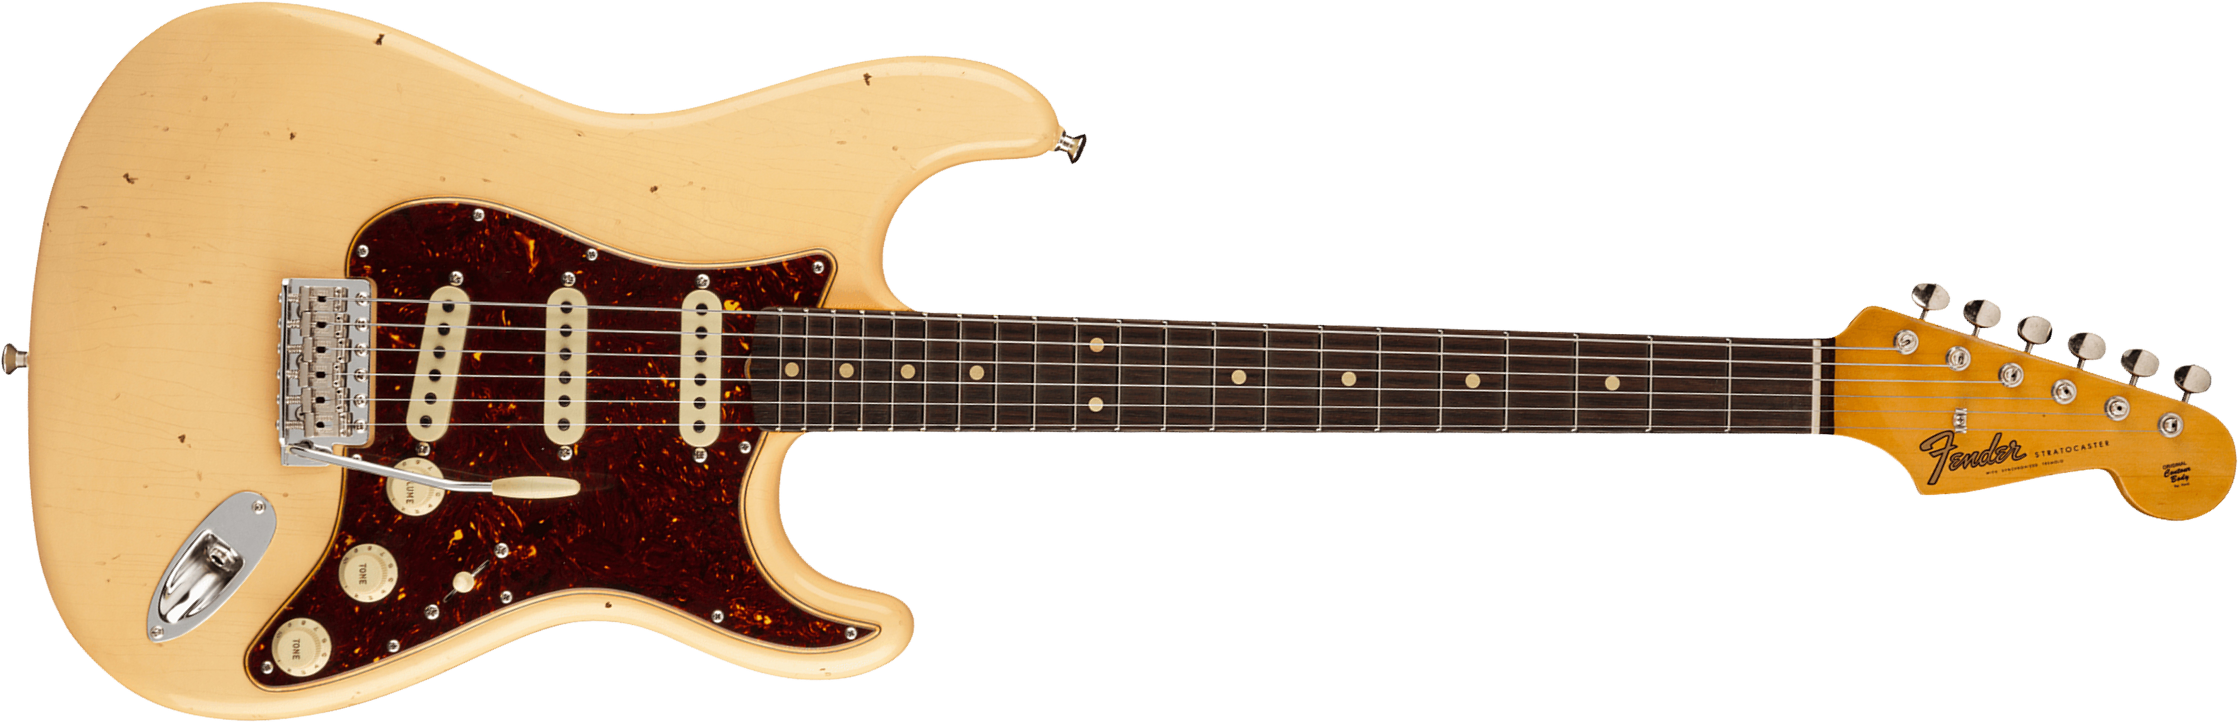 Fender Custom Shop Strat Postmodern Usa Rw - Journeyman Relic Vintage White - Guitarra eléctrica con forma de str. - Main picture